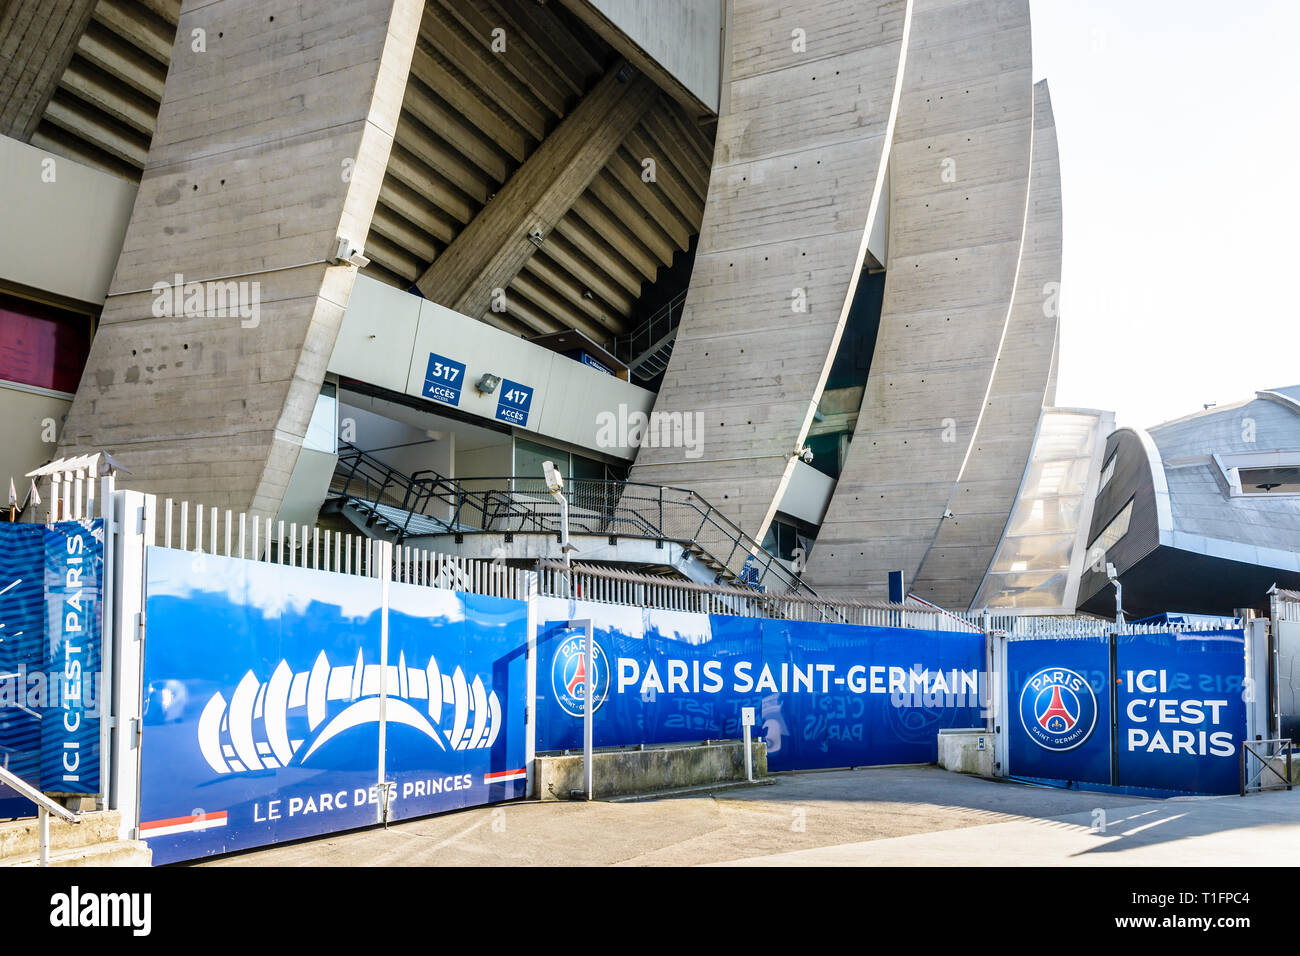 The Parc des Princes stadium, home stadium of the Paris Saint-Germain (PSG) football club in Paris, France. Stock Photo